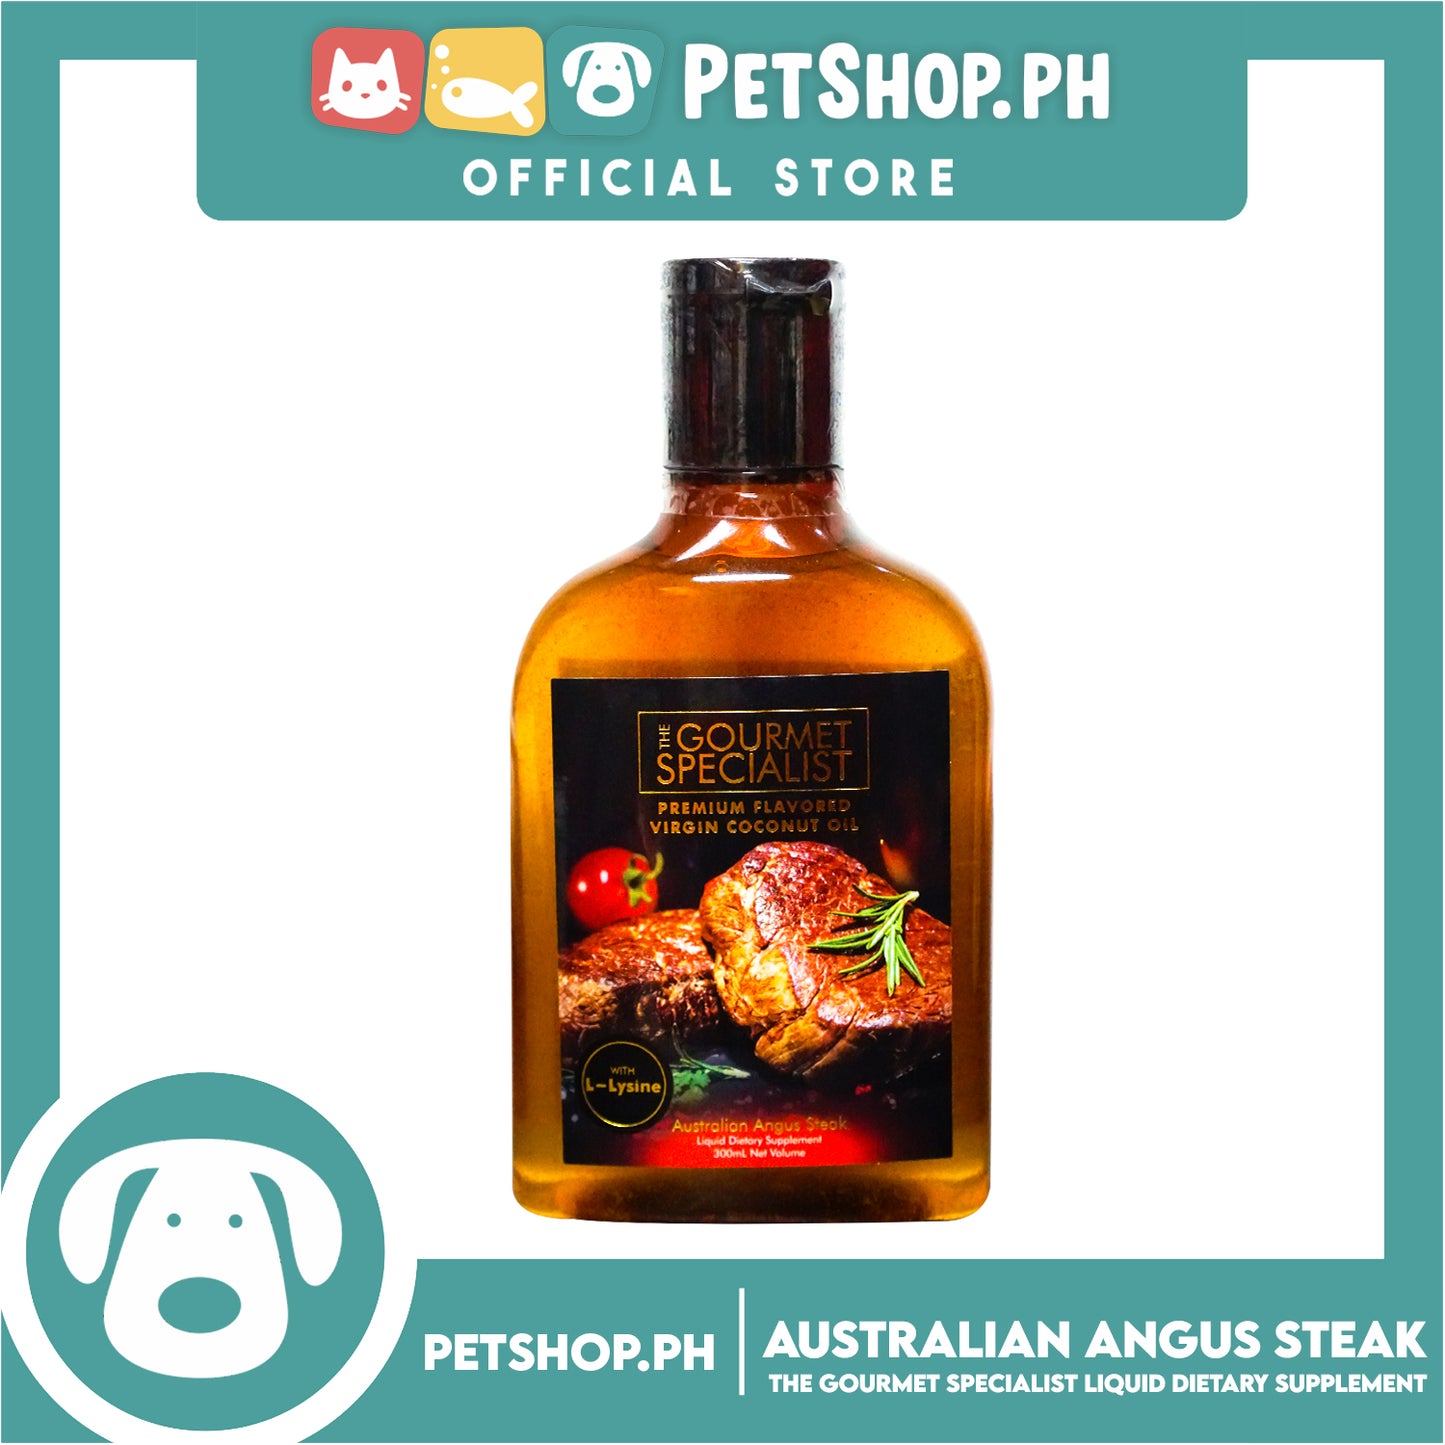 The Gourmet Specialist Premium Flavored Virgin Coconut Oil With L-Lysine for Animals 300ml (Australian Angus Steak)